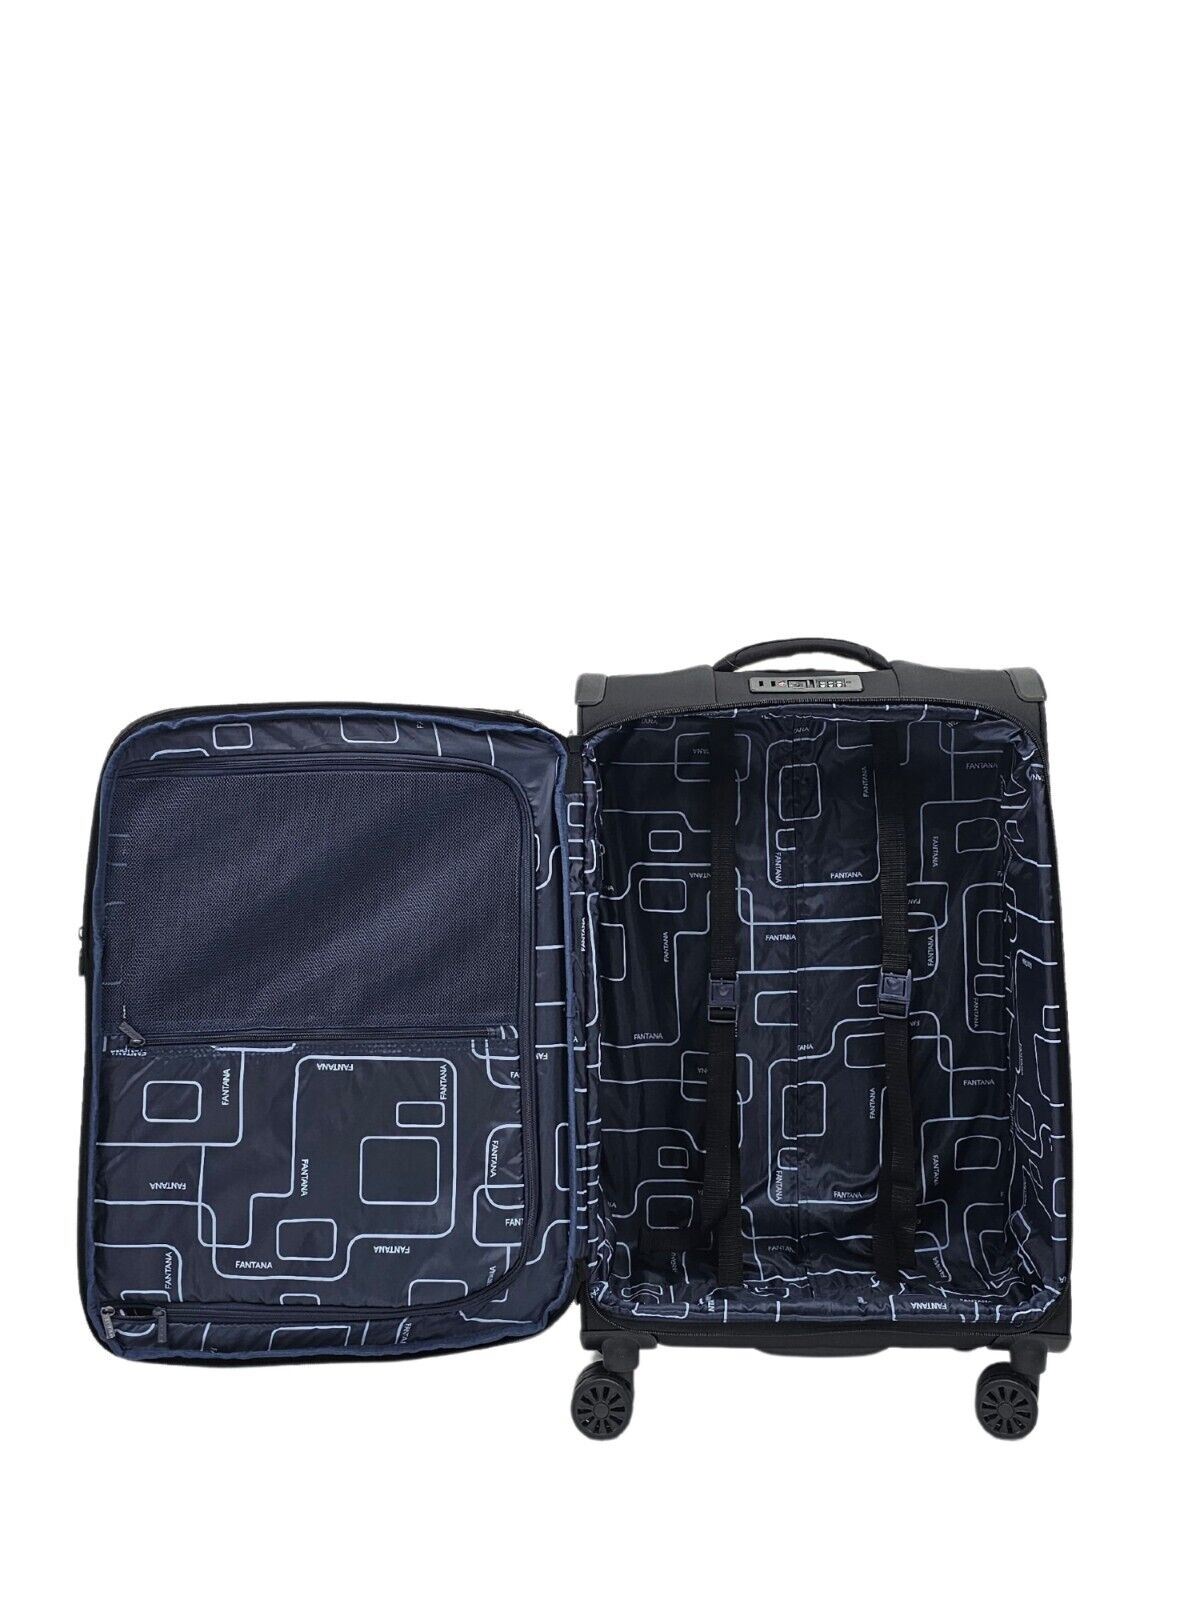 Lightweight Black Suitcases 4 Wheel Luggage Travel Cabin Bag